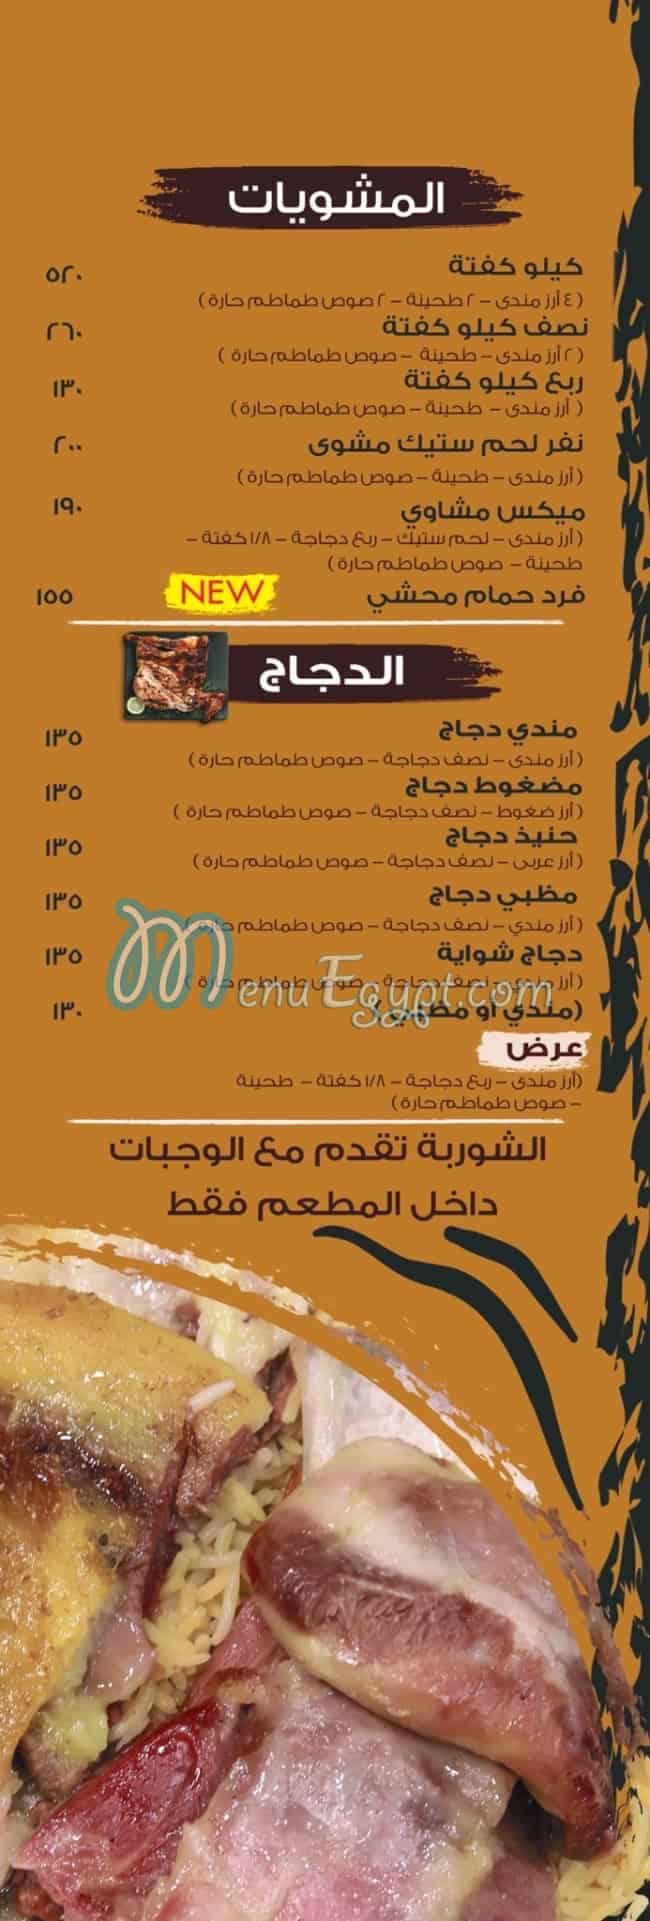 Hadarmout And El Sammar menu Egypt